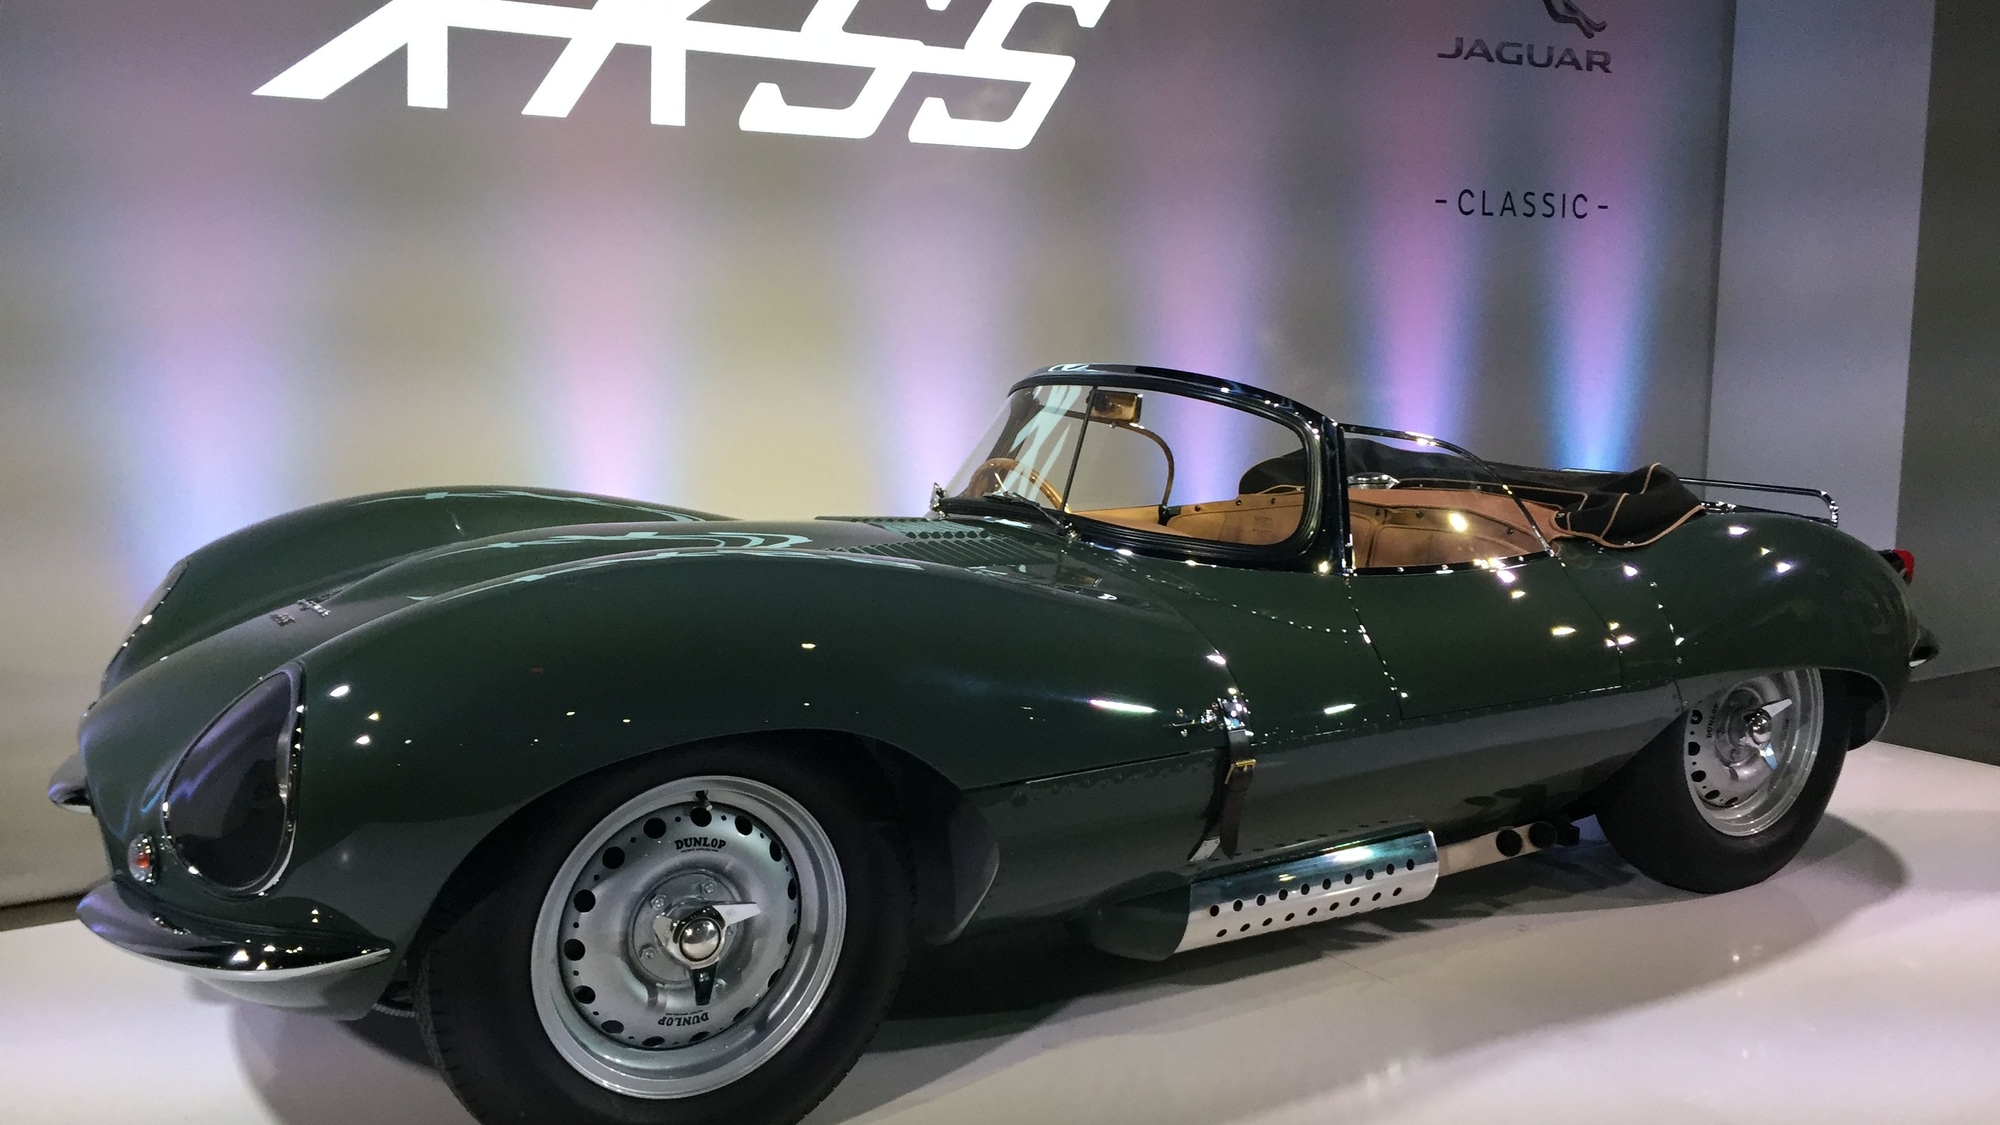 Jaguar 1957